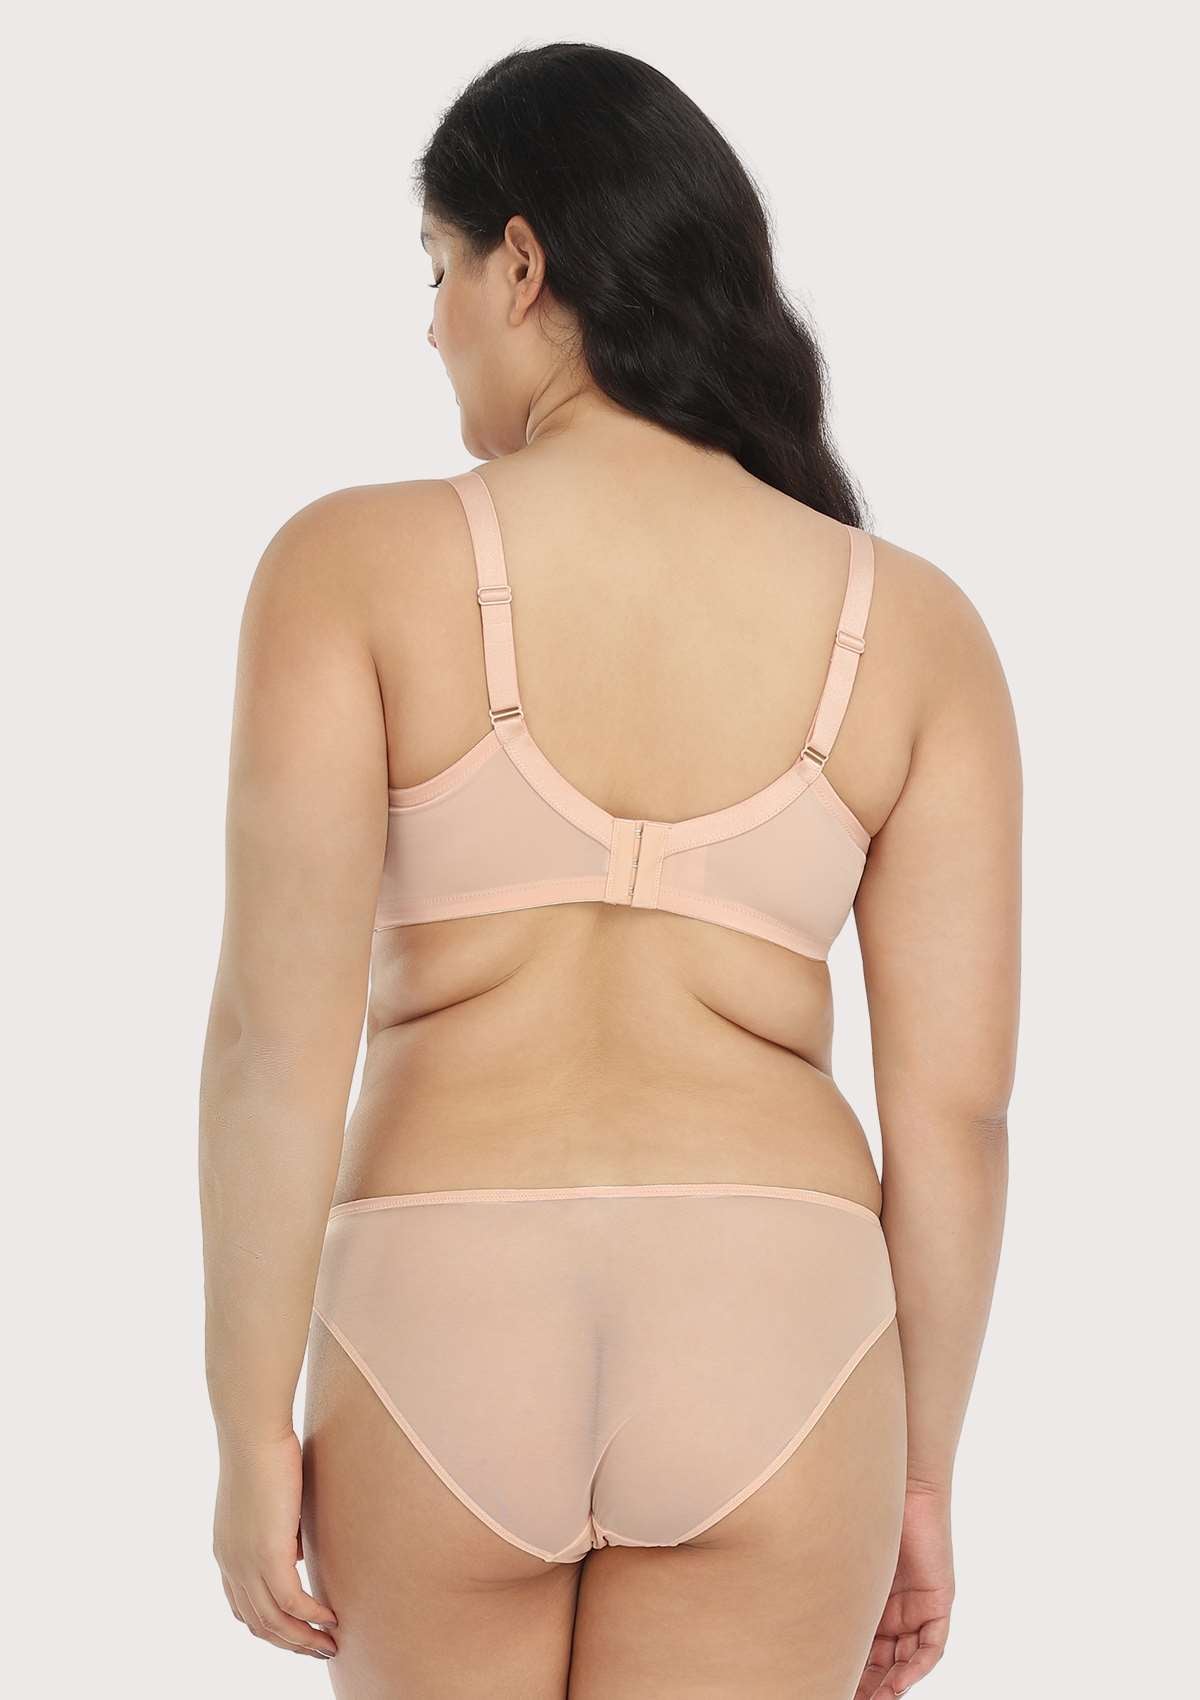 HSIA Sunflower Matching Bra And Panties Set: Comfortable Plus Size Bra - Pink / 44 / DD/E